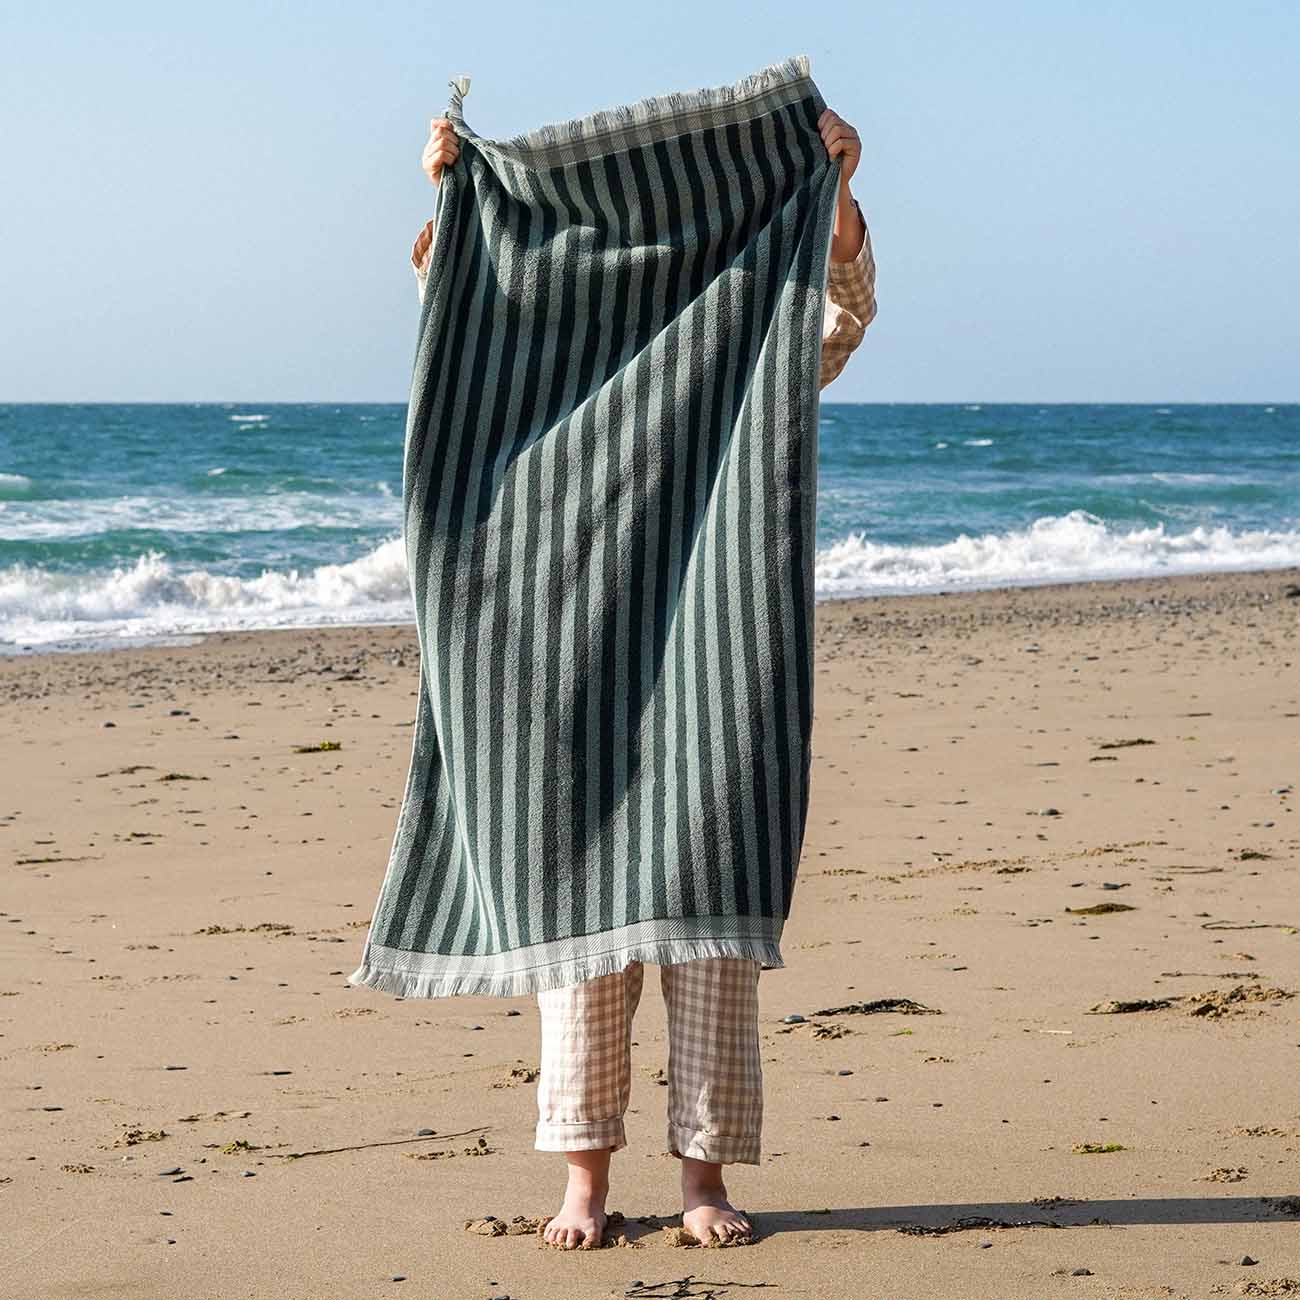  Dl Beach Towel,Sand Free Beach Towels Oversized 39